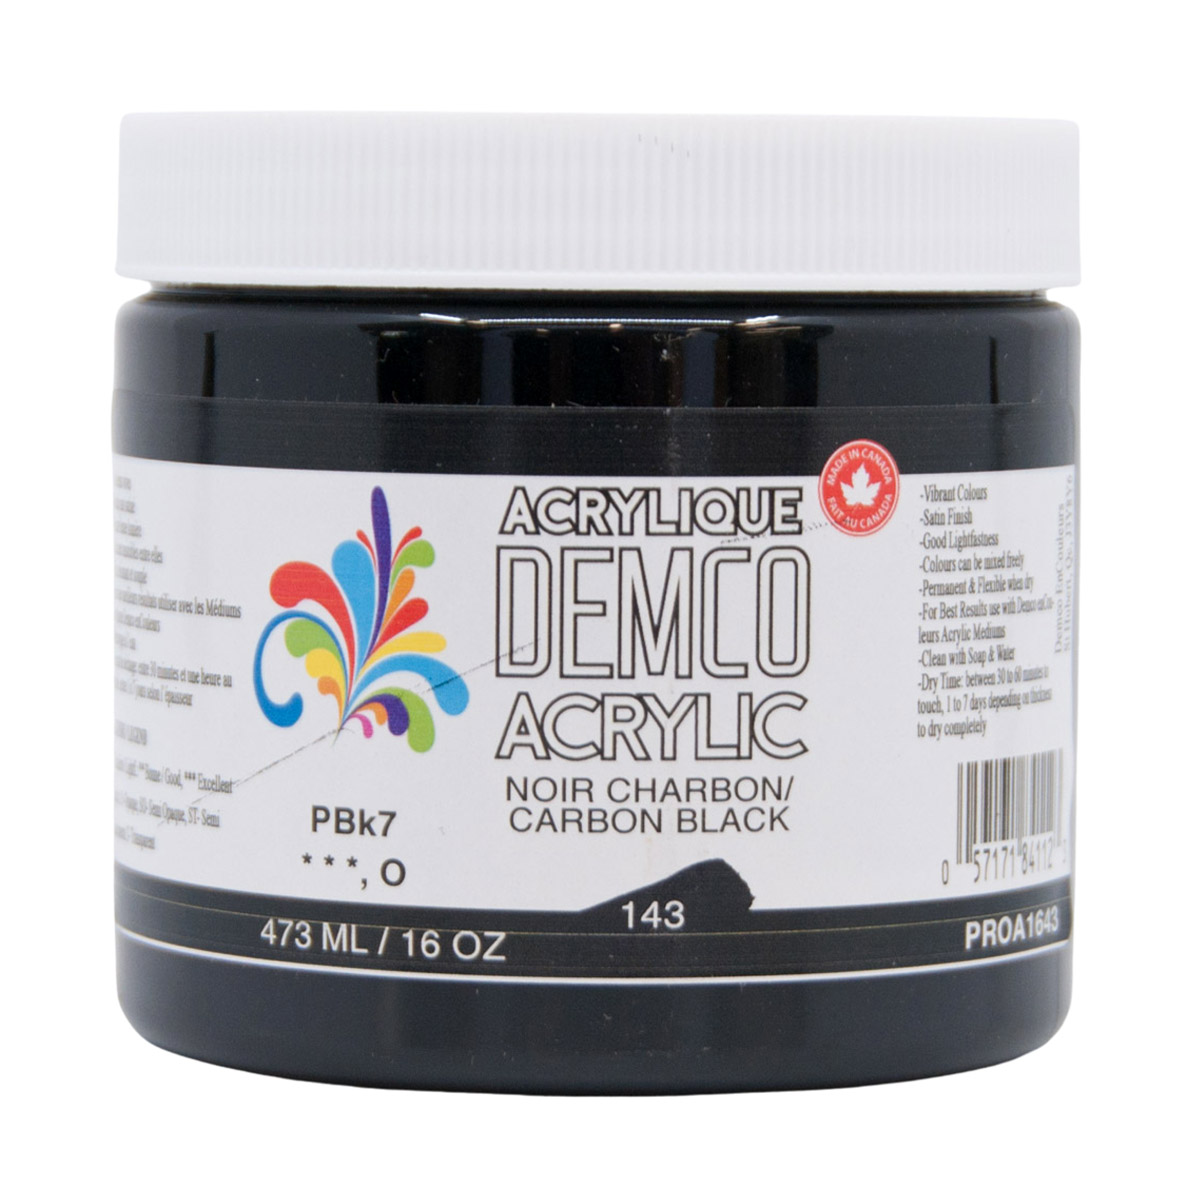 Demco Acrylic Carbon Black 473ml/16oz